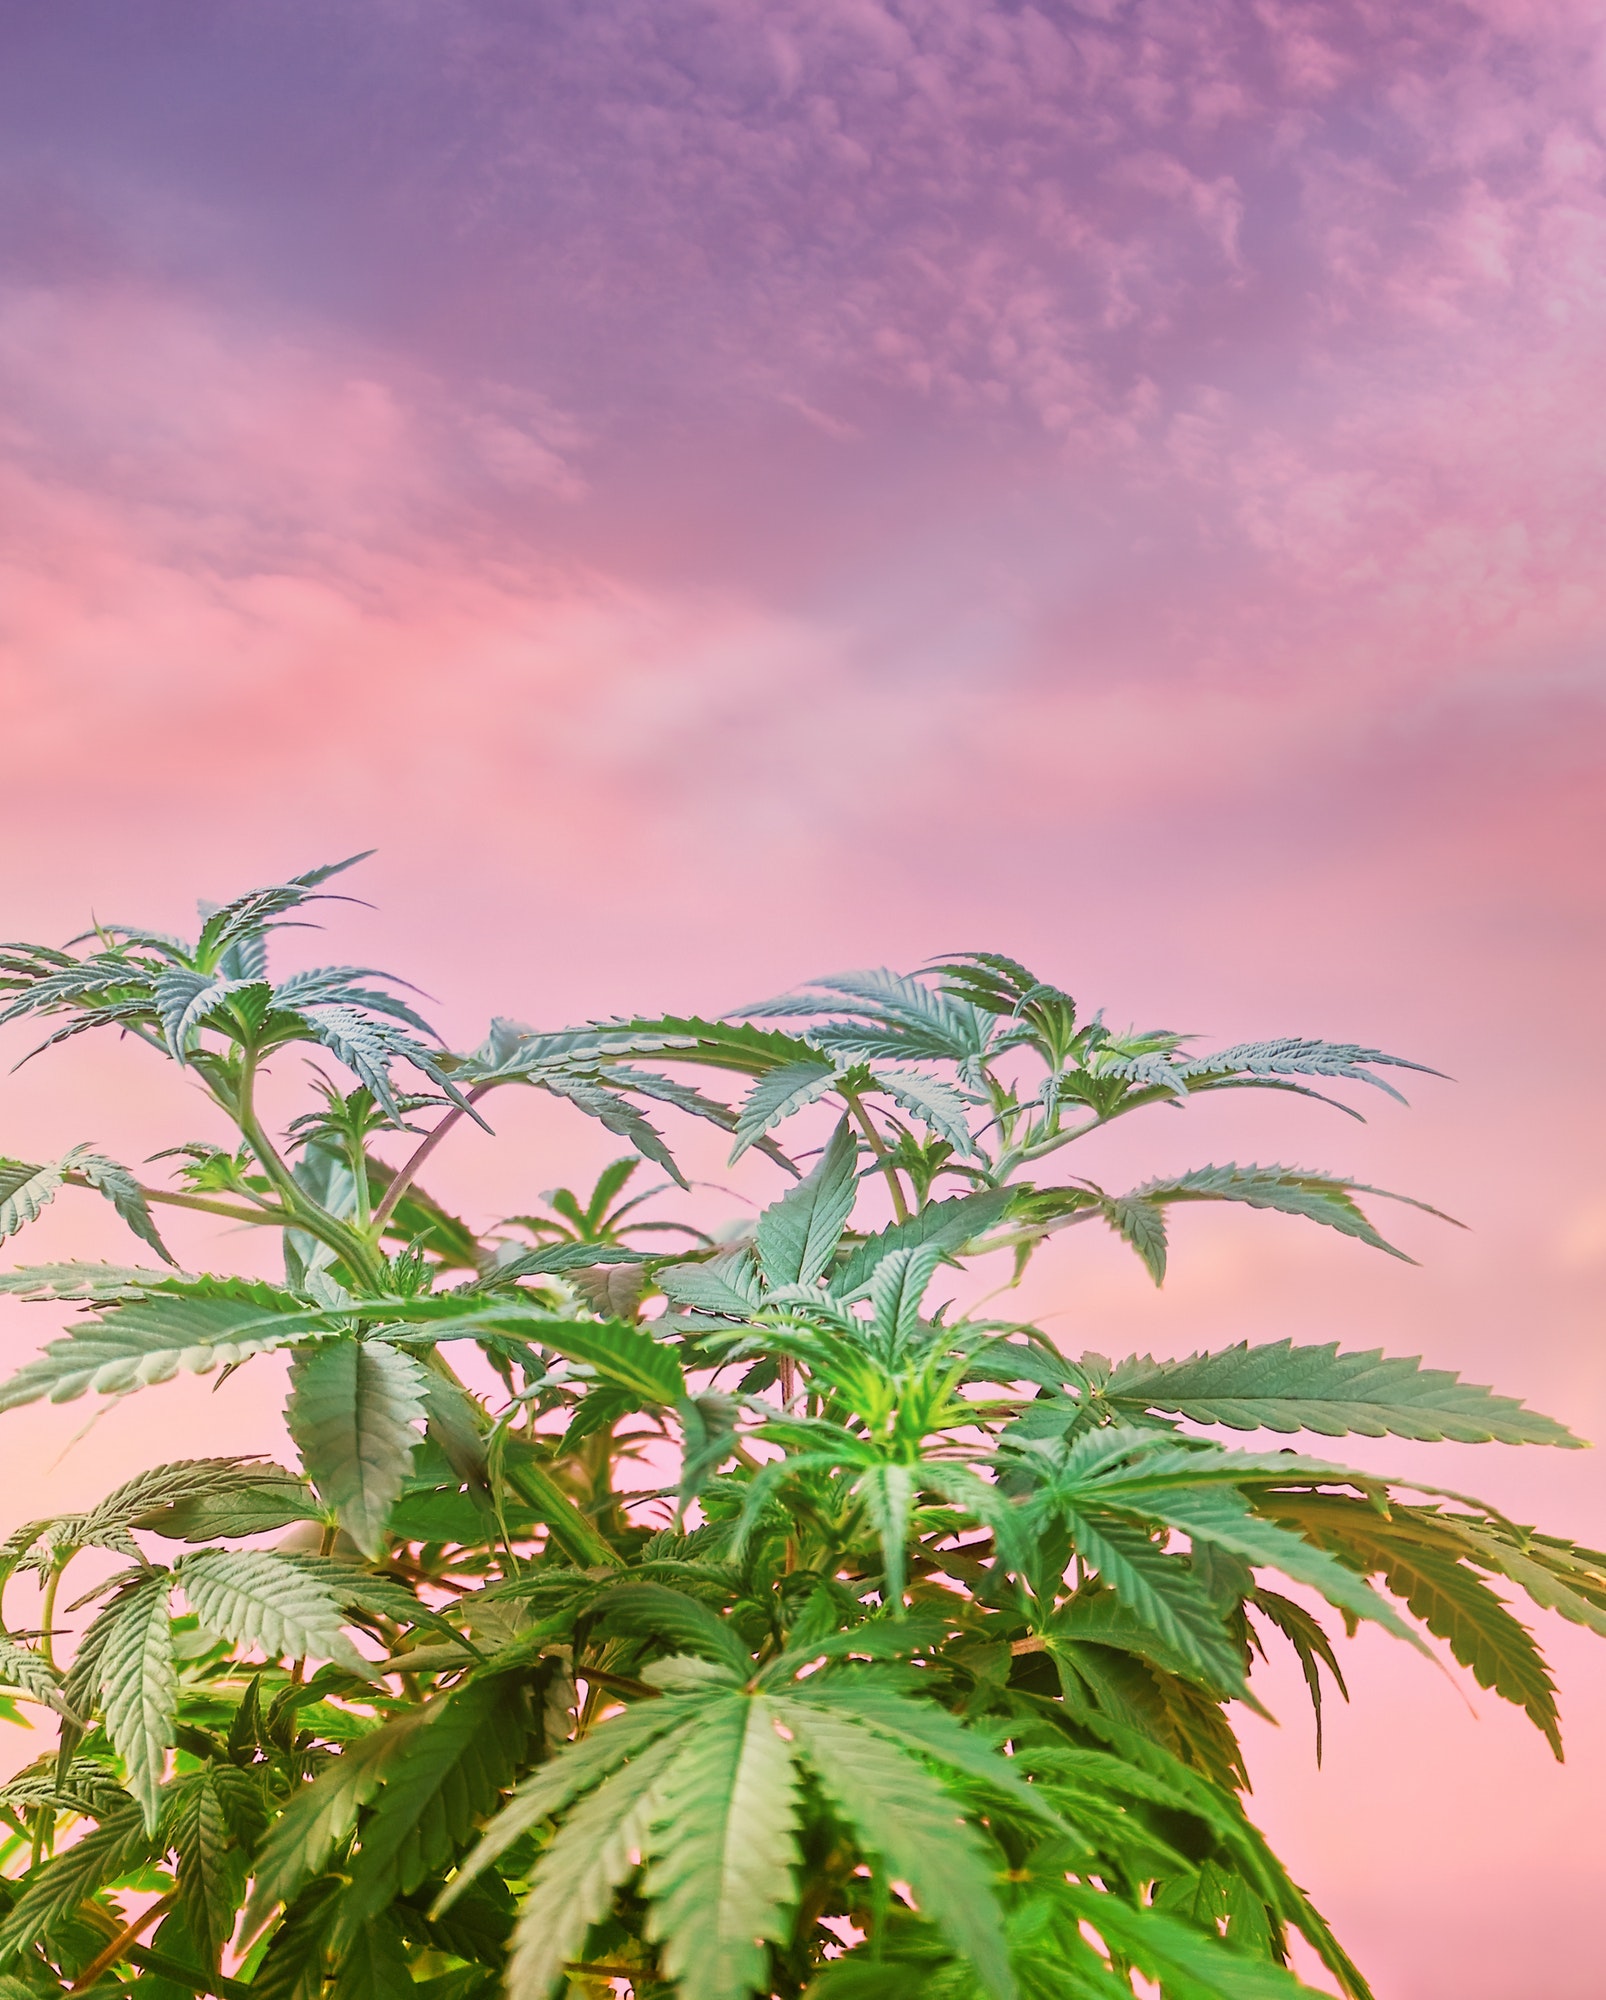 Marijuana plant against purple pink cloudy sky